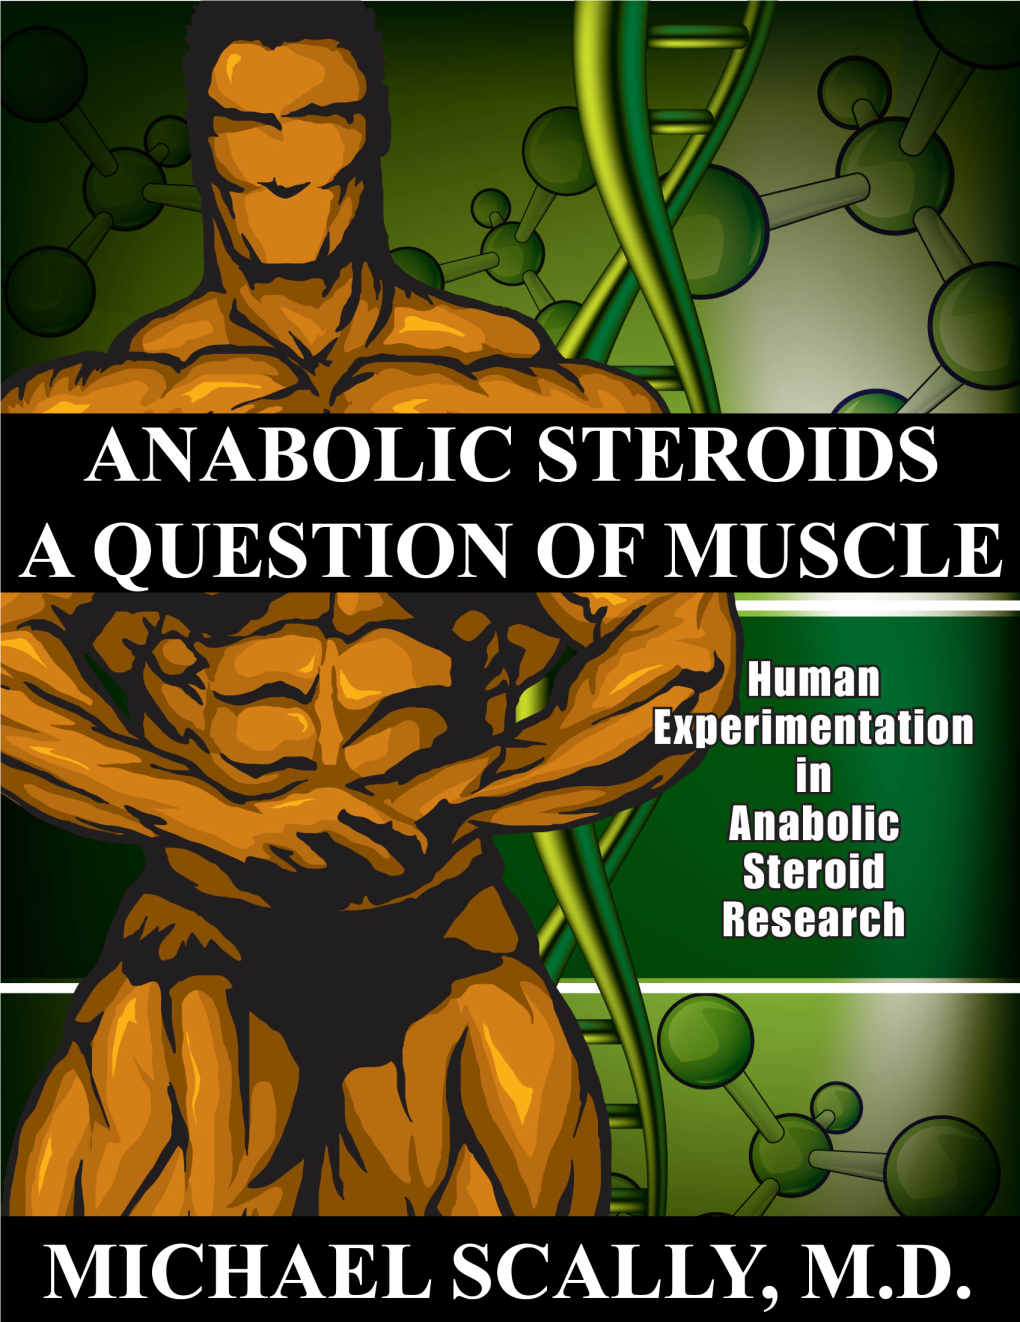 Testosterone & Anabolic Steroids